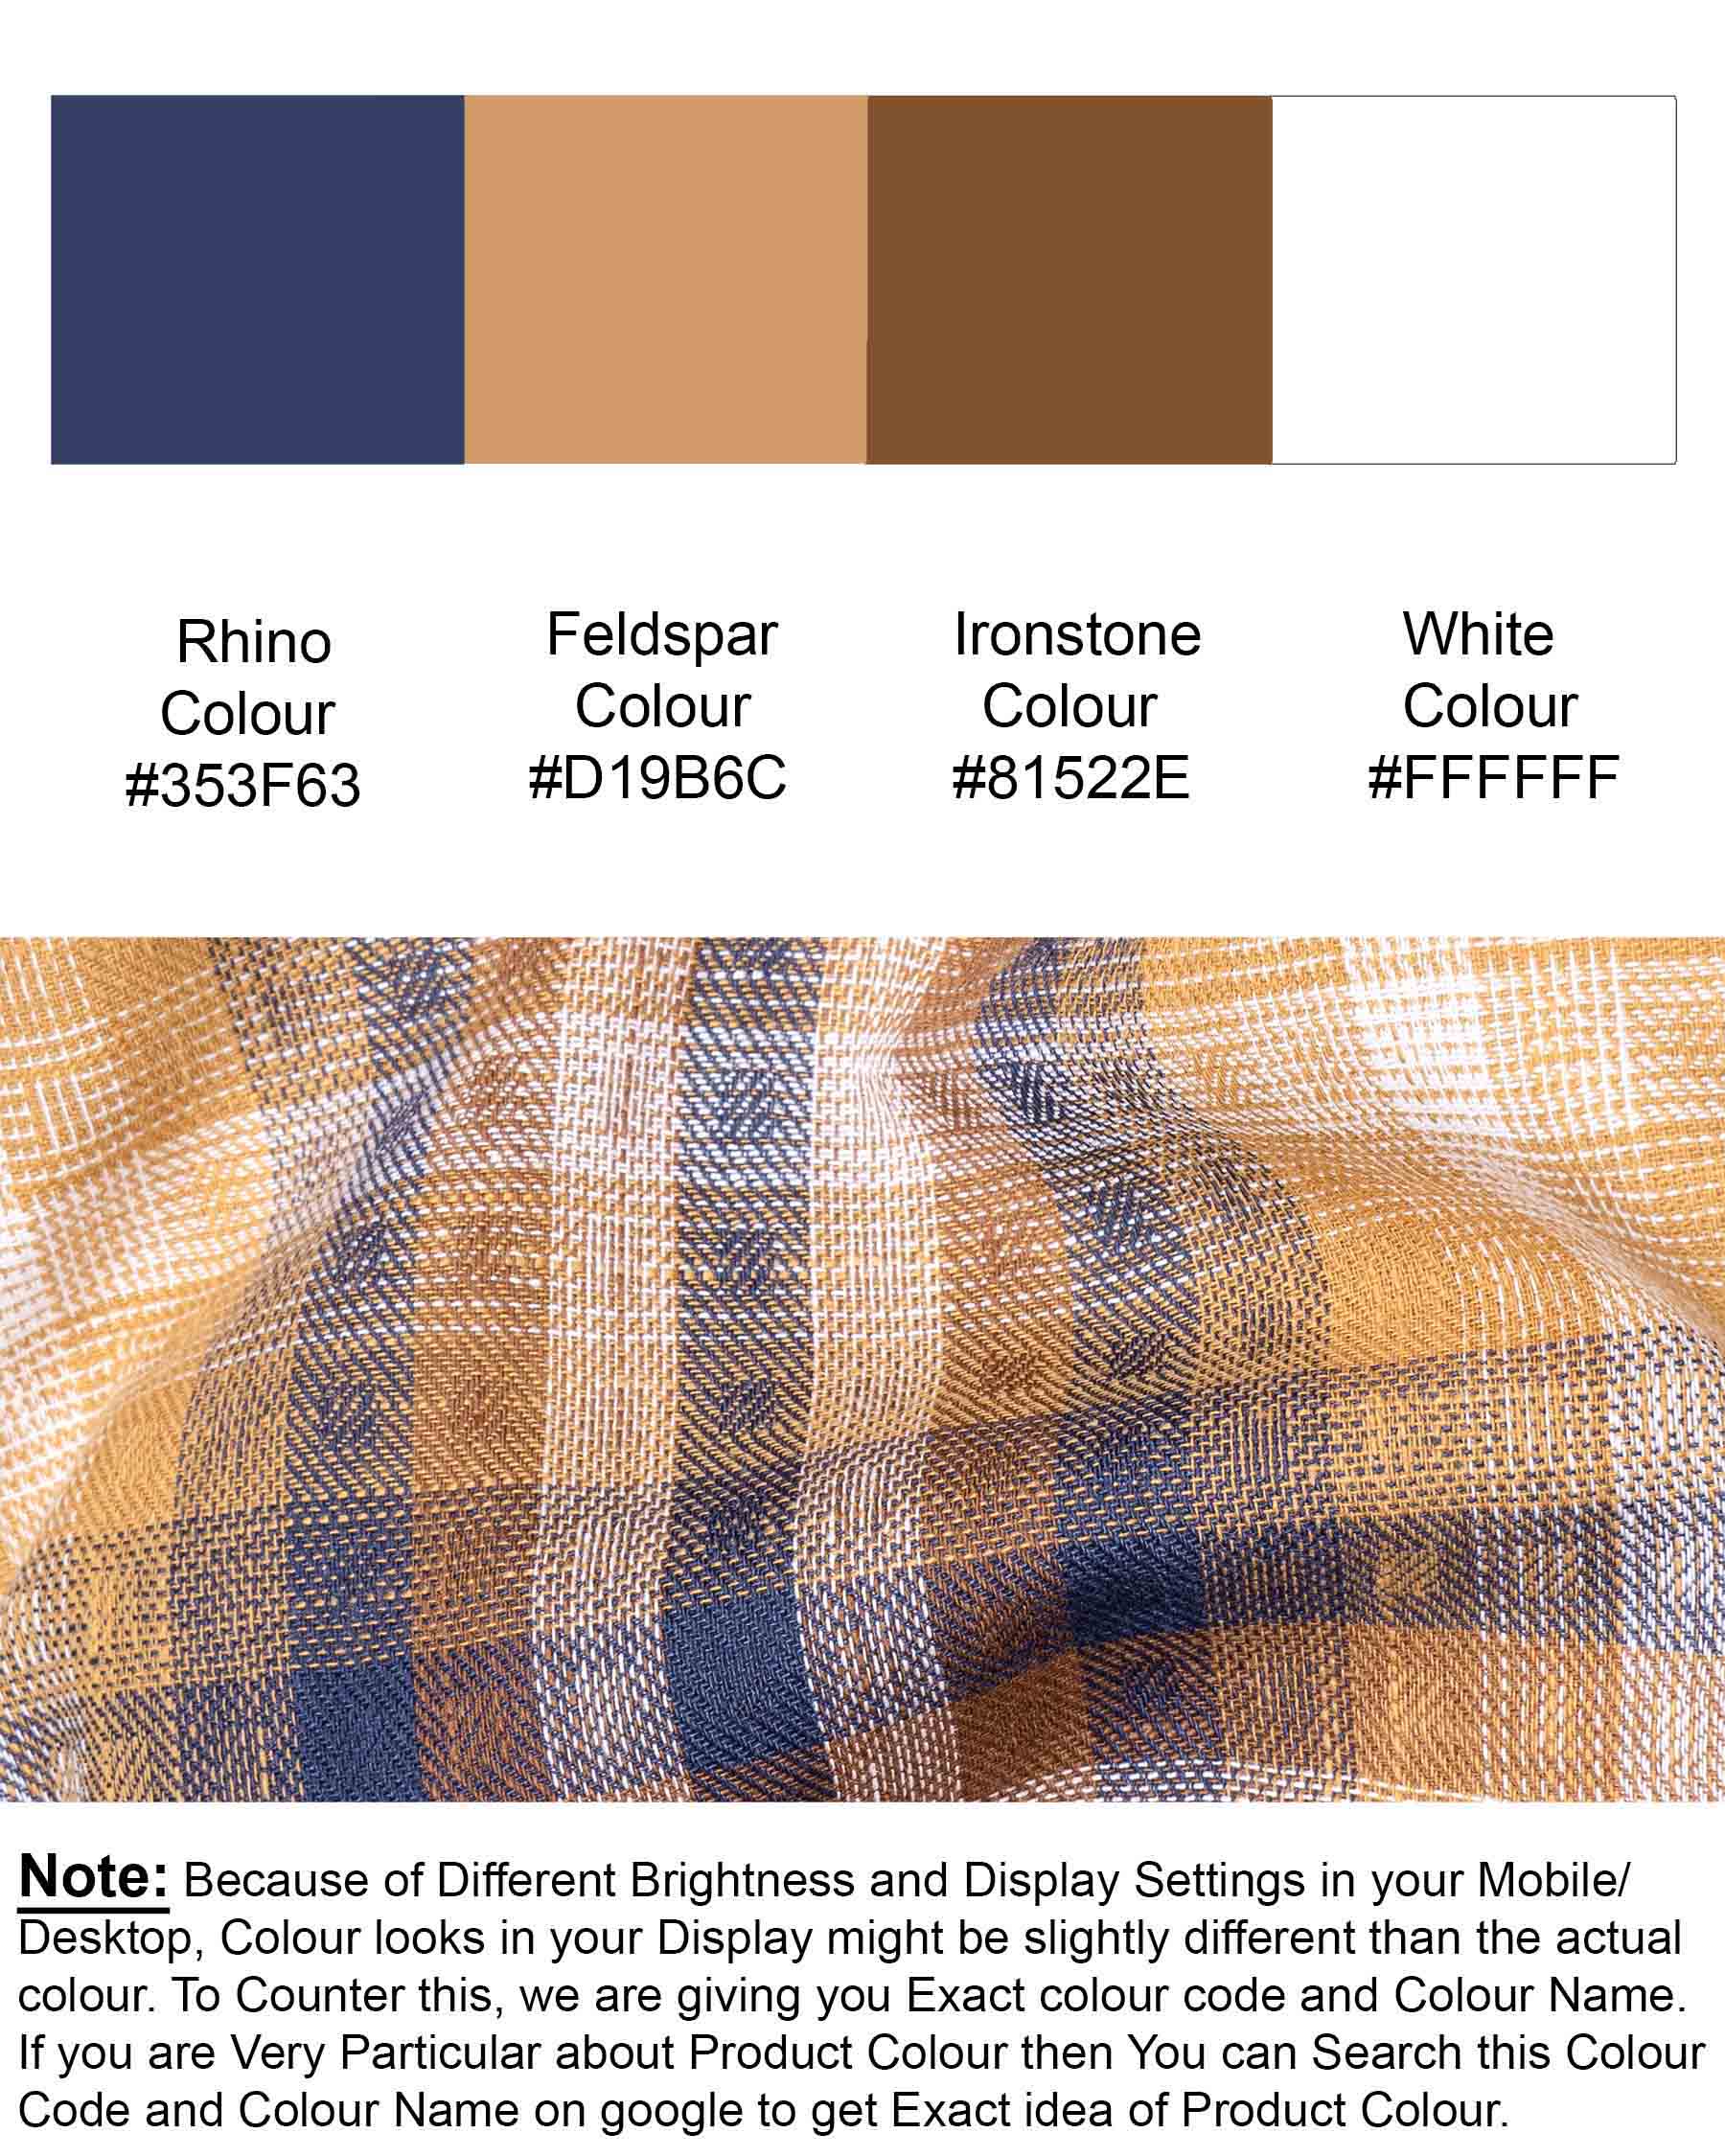 Ironstone Brown and Rhino Blue Plaid Twill Textured Premium Cotton Shirt 6468-BD-BLE-38, 6468-BD-BLE-H-38, 6468-BD-BLE-39, 6468-BD-BLE-H-39, 6468-BD-BLE-40, 6468-BD-BLE-H-40, 6468-BD-BLE-42, 6468-BD-BLE-H-42, 6468-BD-BLE-44, 6468-BD-BLE-H-44, 6468-BD-BLE-46, 6468-BD-BLE-H-46, 6468-BD-BLE-48, 6468-BD-BLE-H-48, 6468-BD-BLE-50, 6468-BD-BLE-H-50, 6468-BD-BLE-52, 6468-BD-BLE-H-52